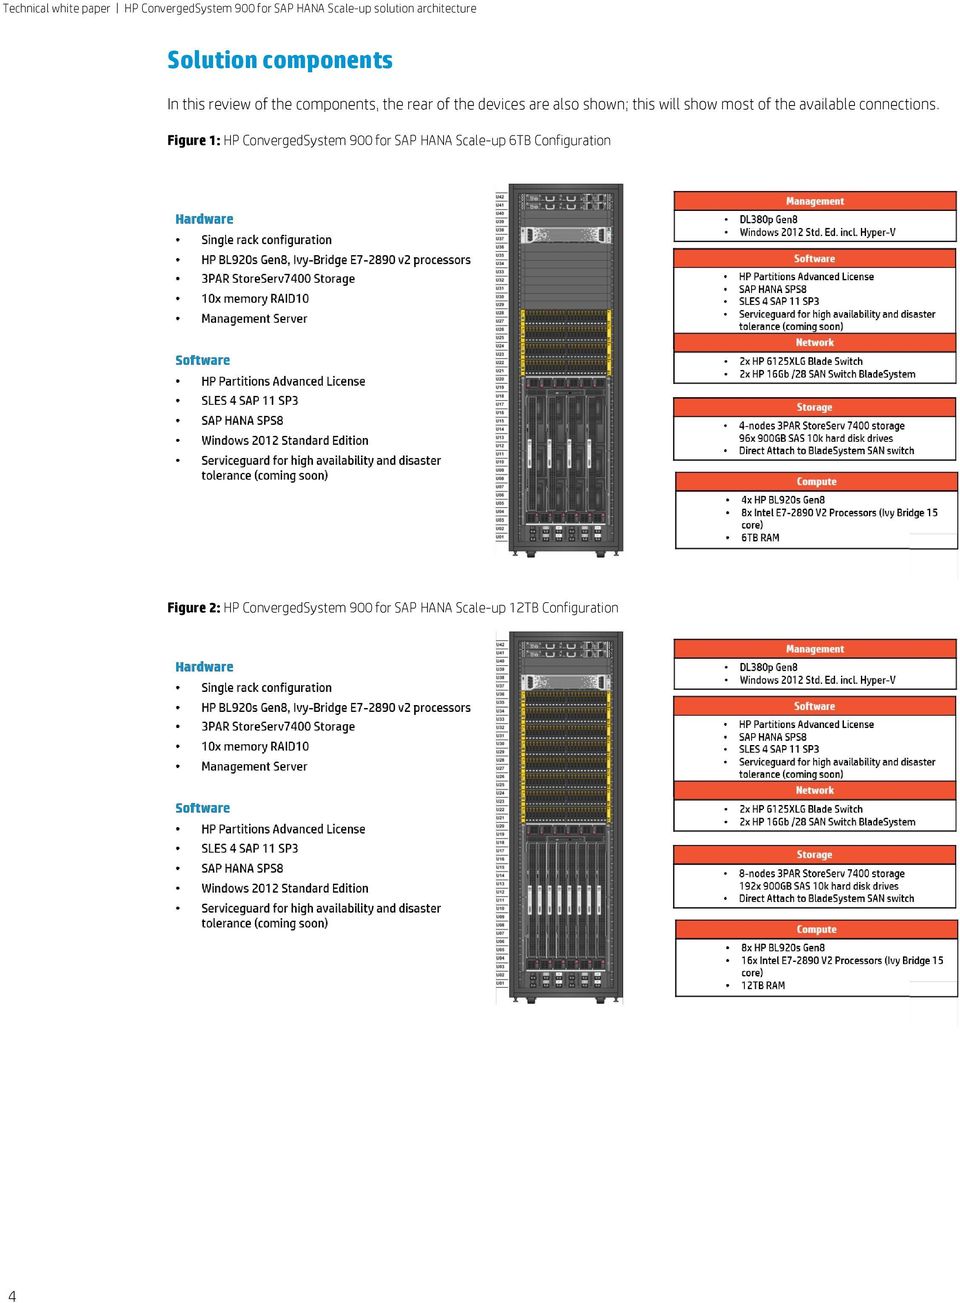 Figure 1: HP ConvergedSystem 900 for SAP HANA Scale-up 6TB Configuration